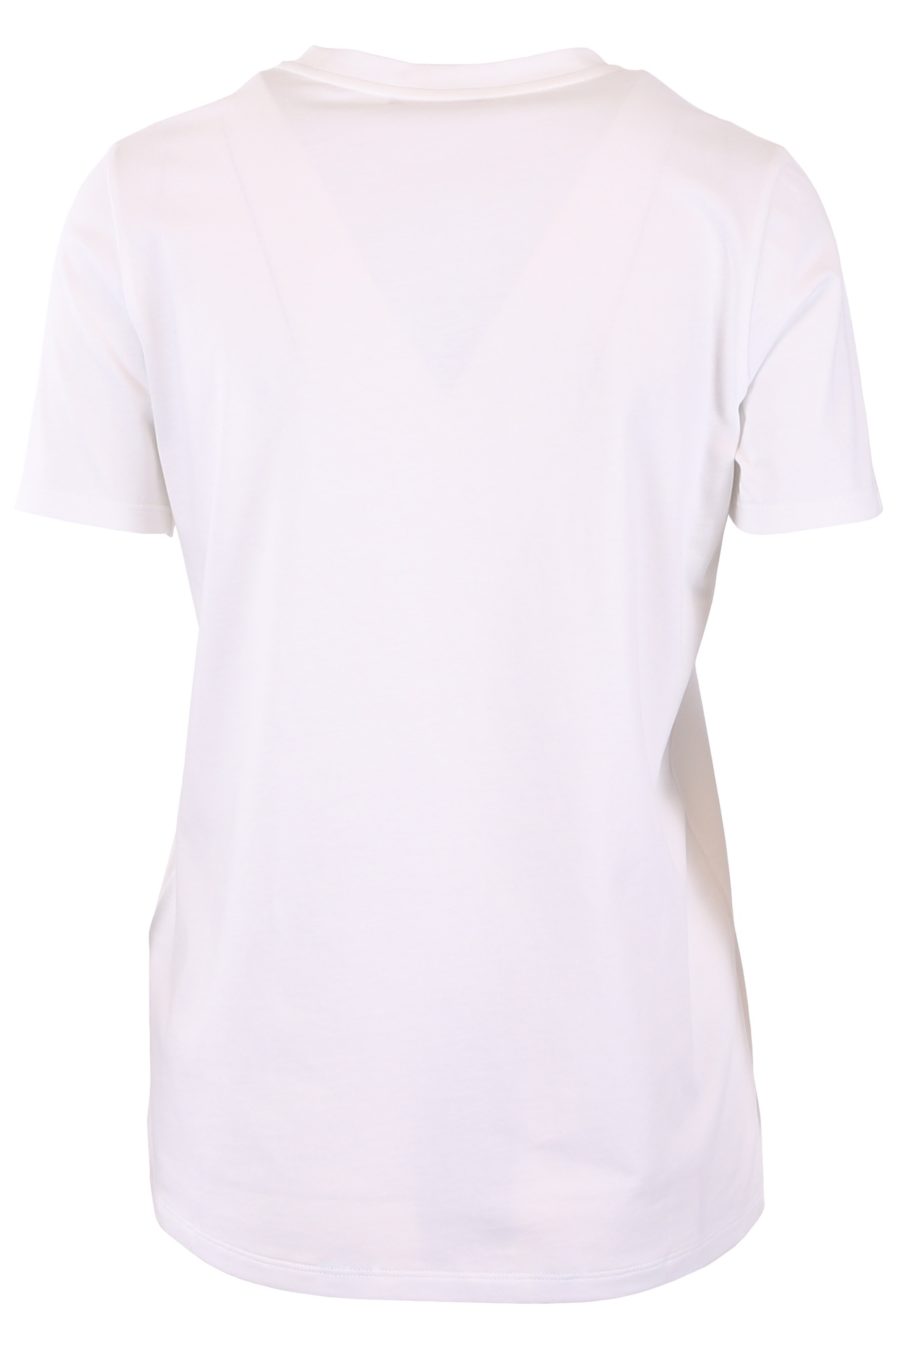 Balmain T-shirt white with black logo - 6b8ae18f062637f3165b6f4f5236b7c042ab6943